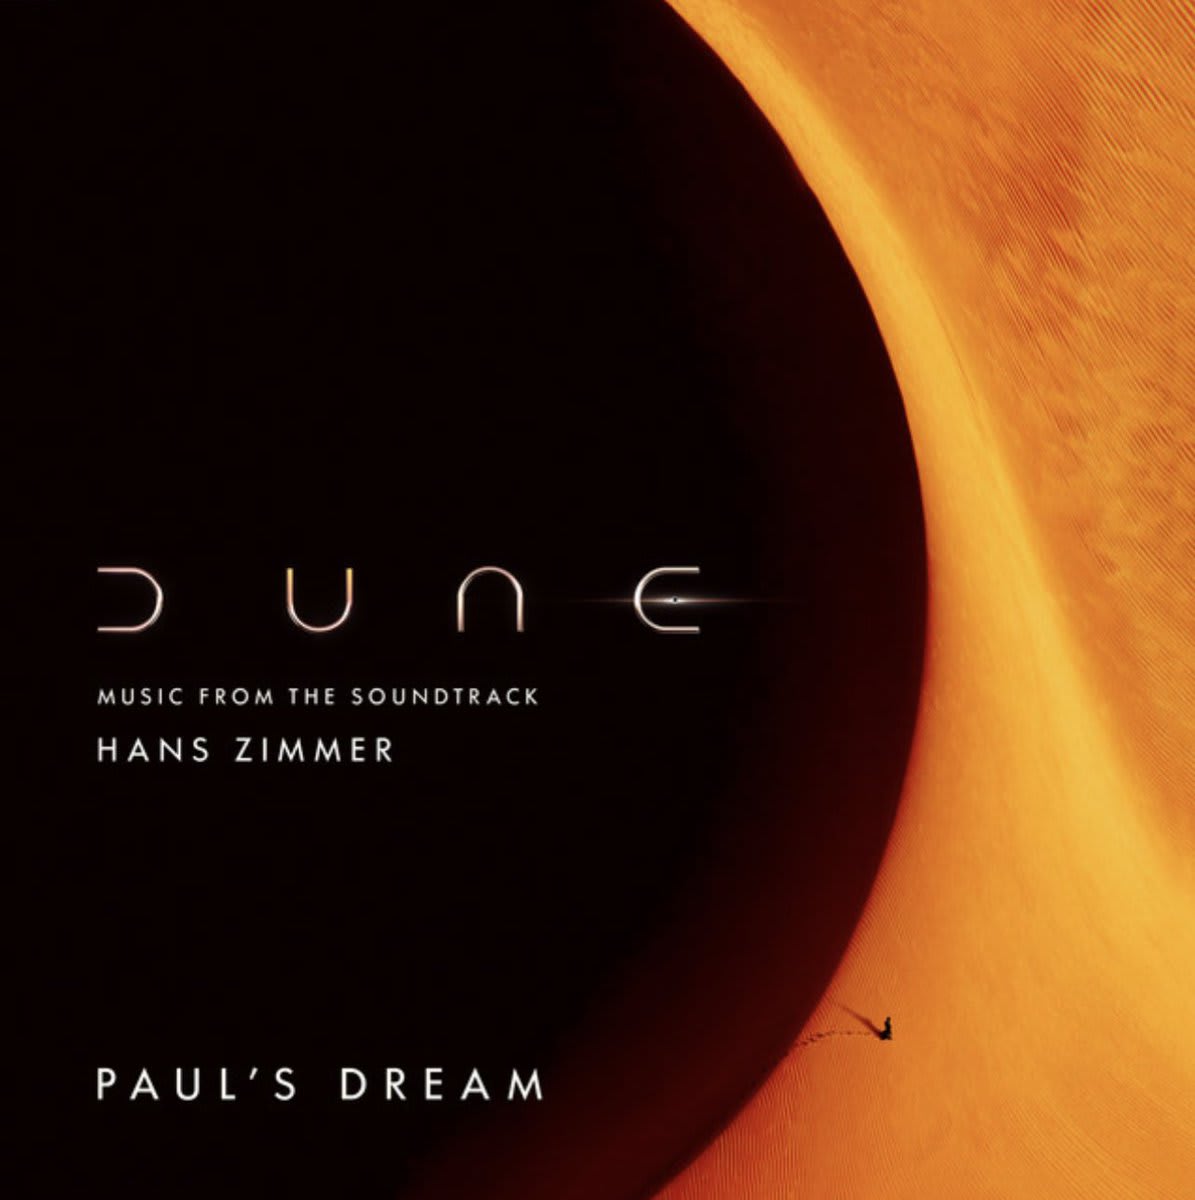 Hear the first tracks from Hans Zimmer's score from Denis Villeneuve's 'Dune':